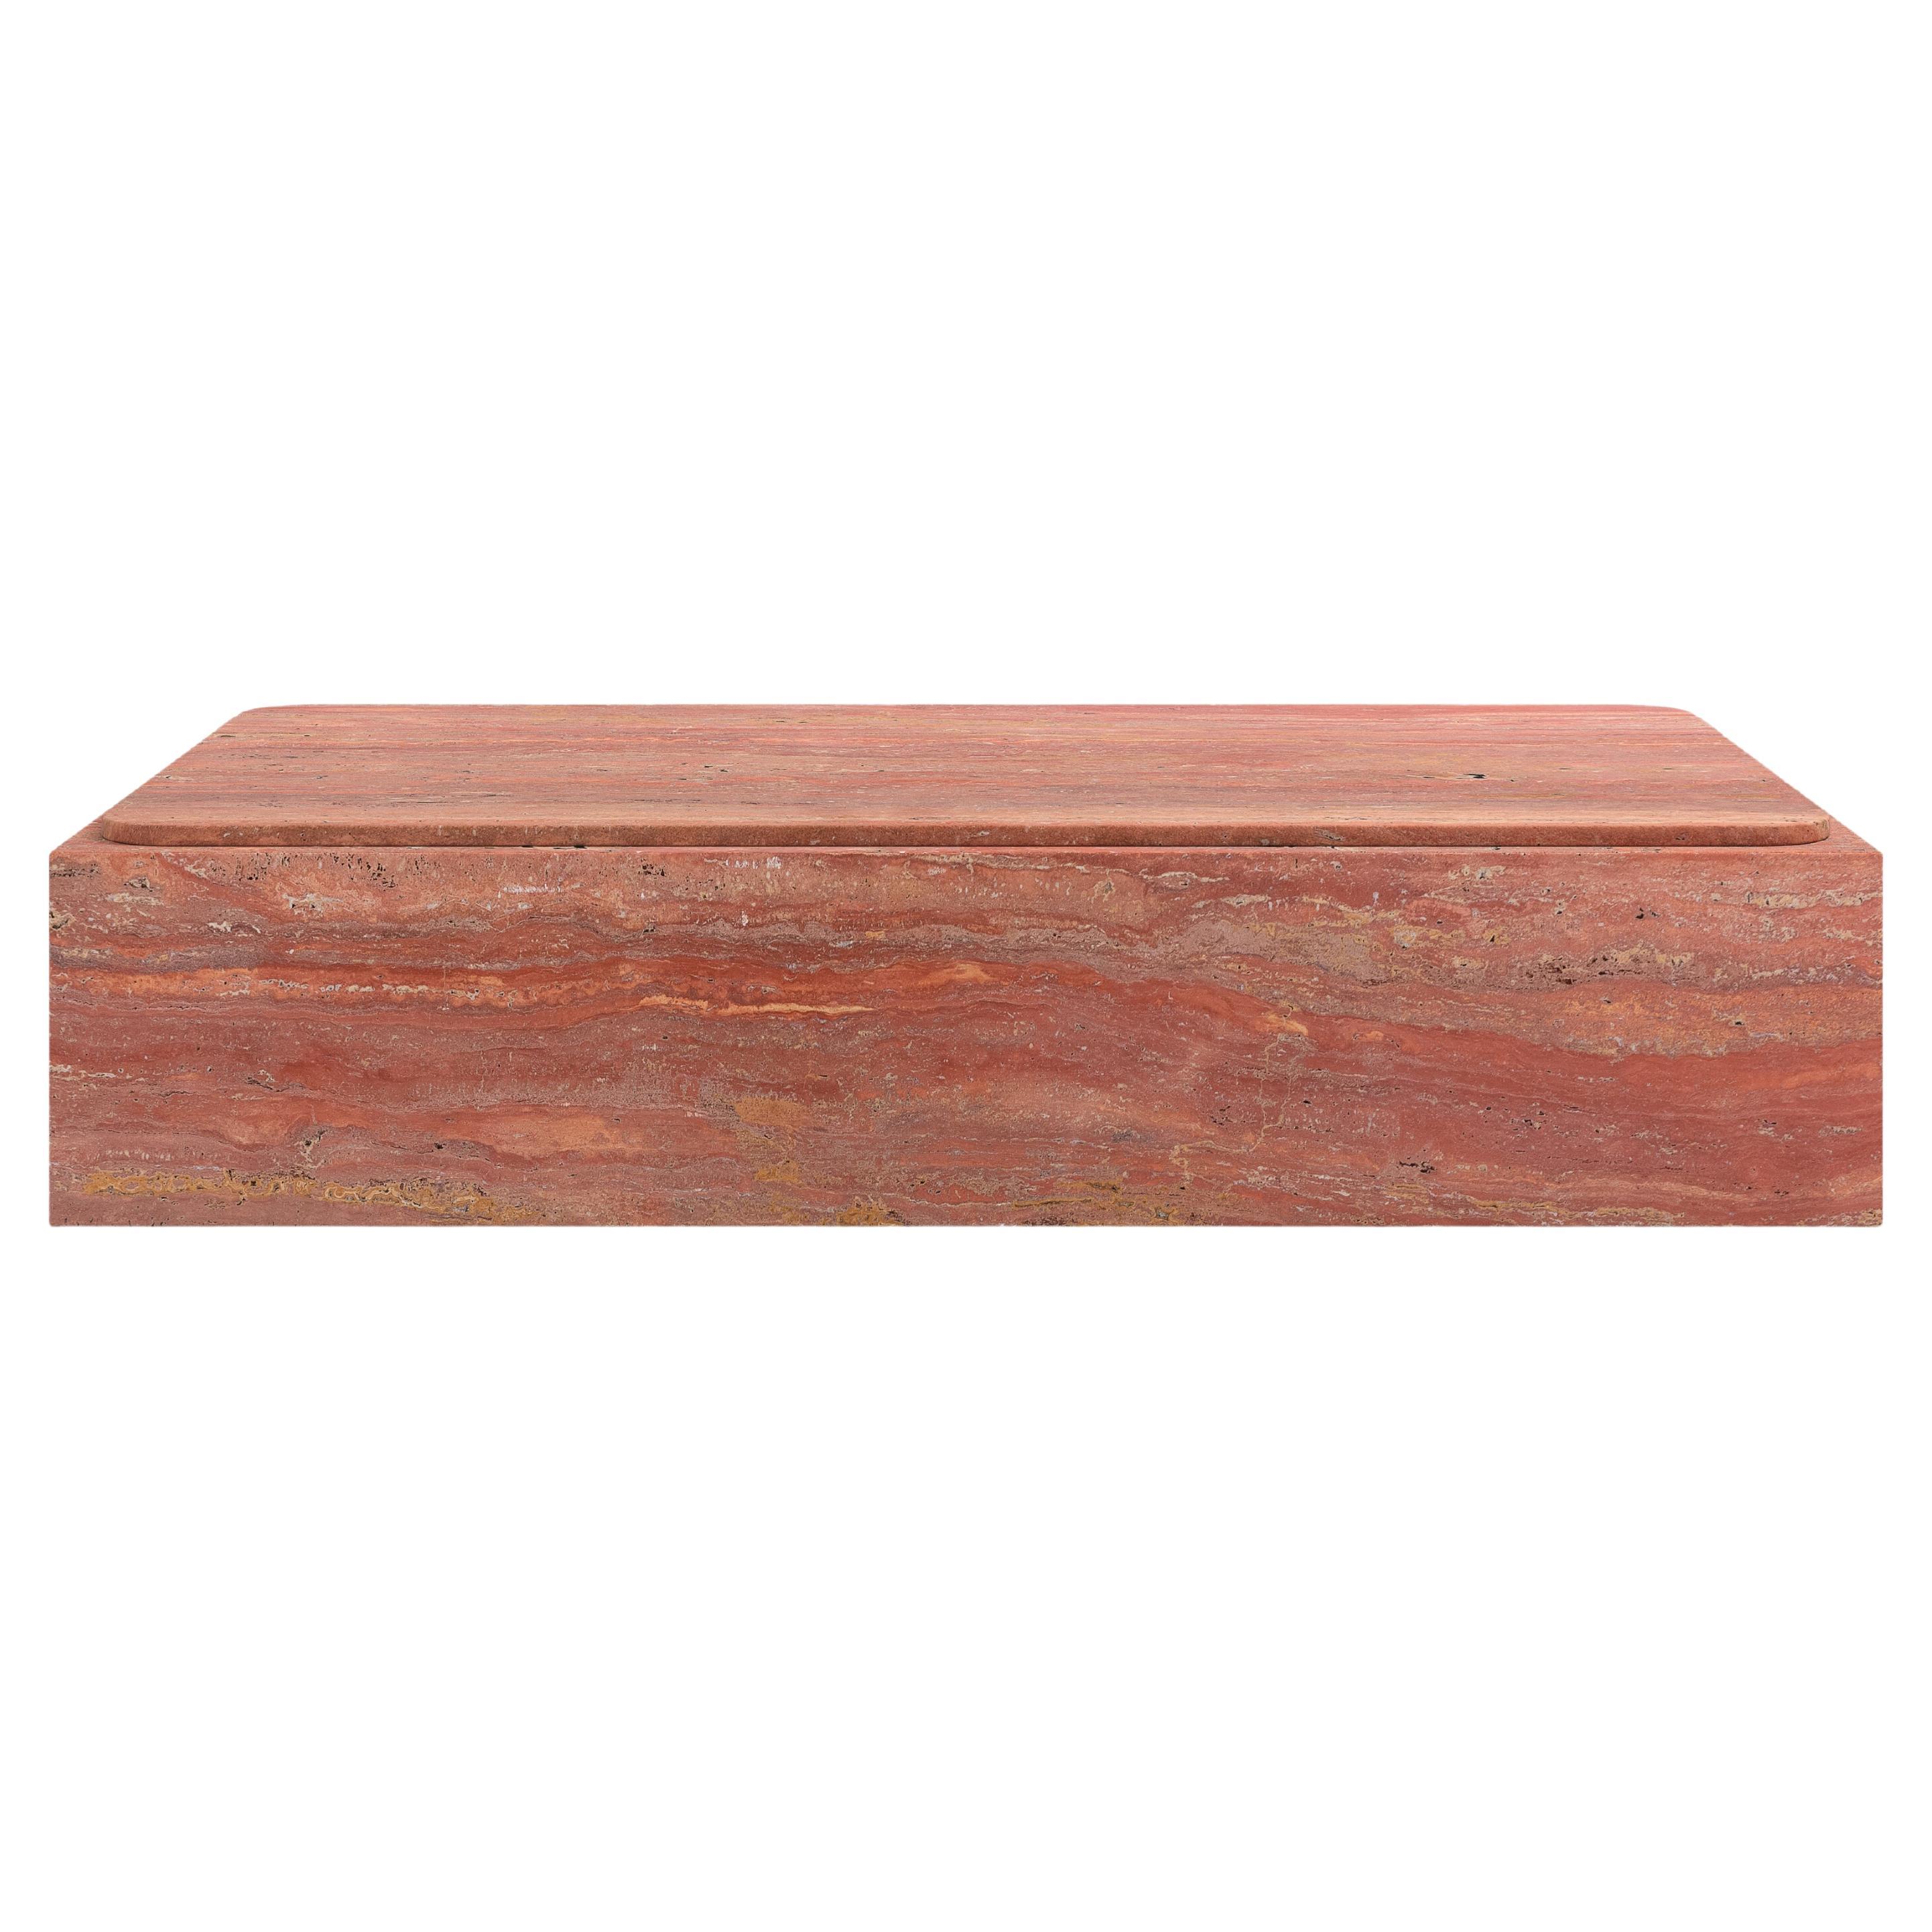 FORM(LA) Cubo Rectangle Plinth Coffee Table 60”L x 36”W x 13”H Travertino Rosso For Sale